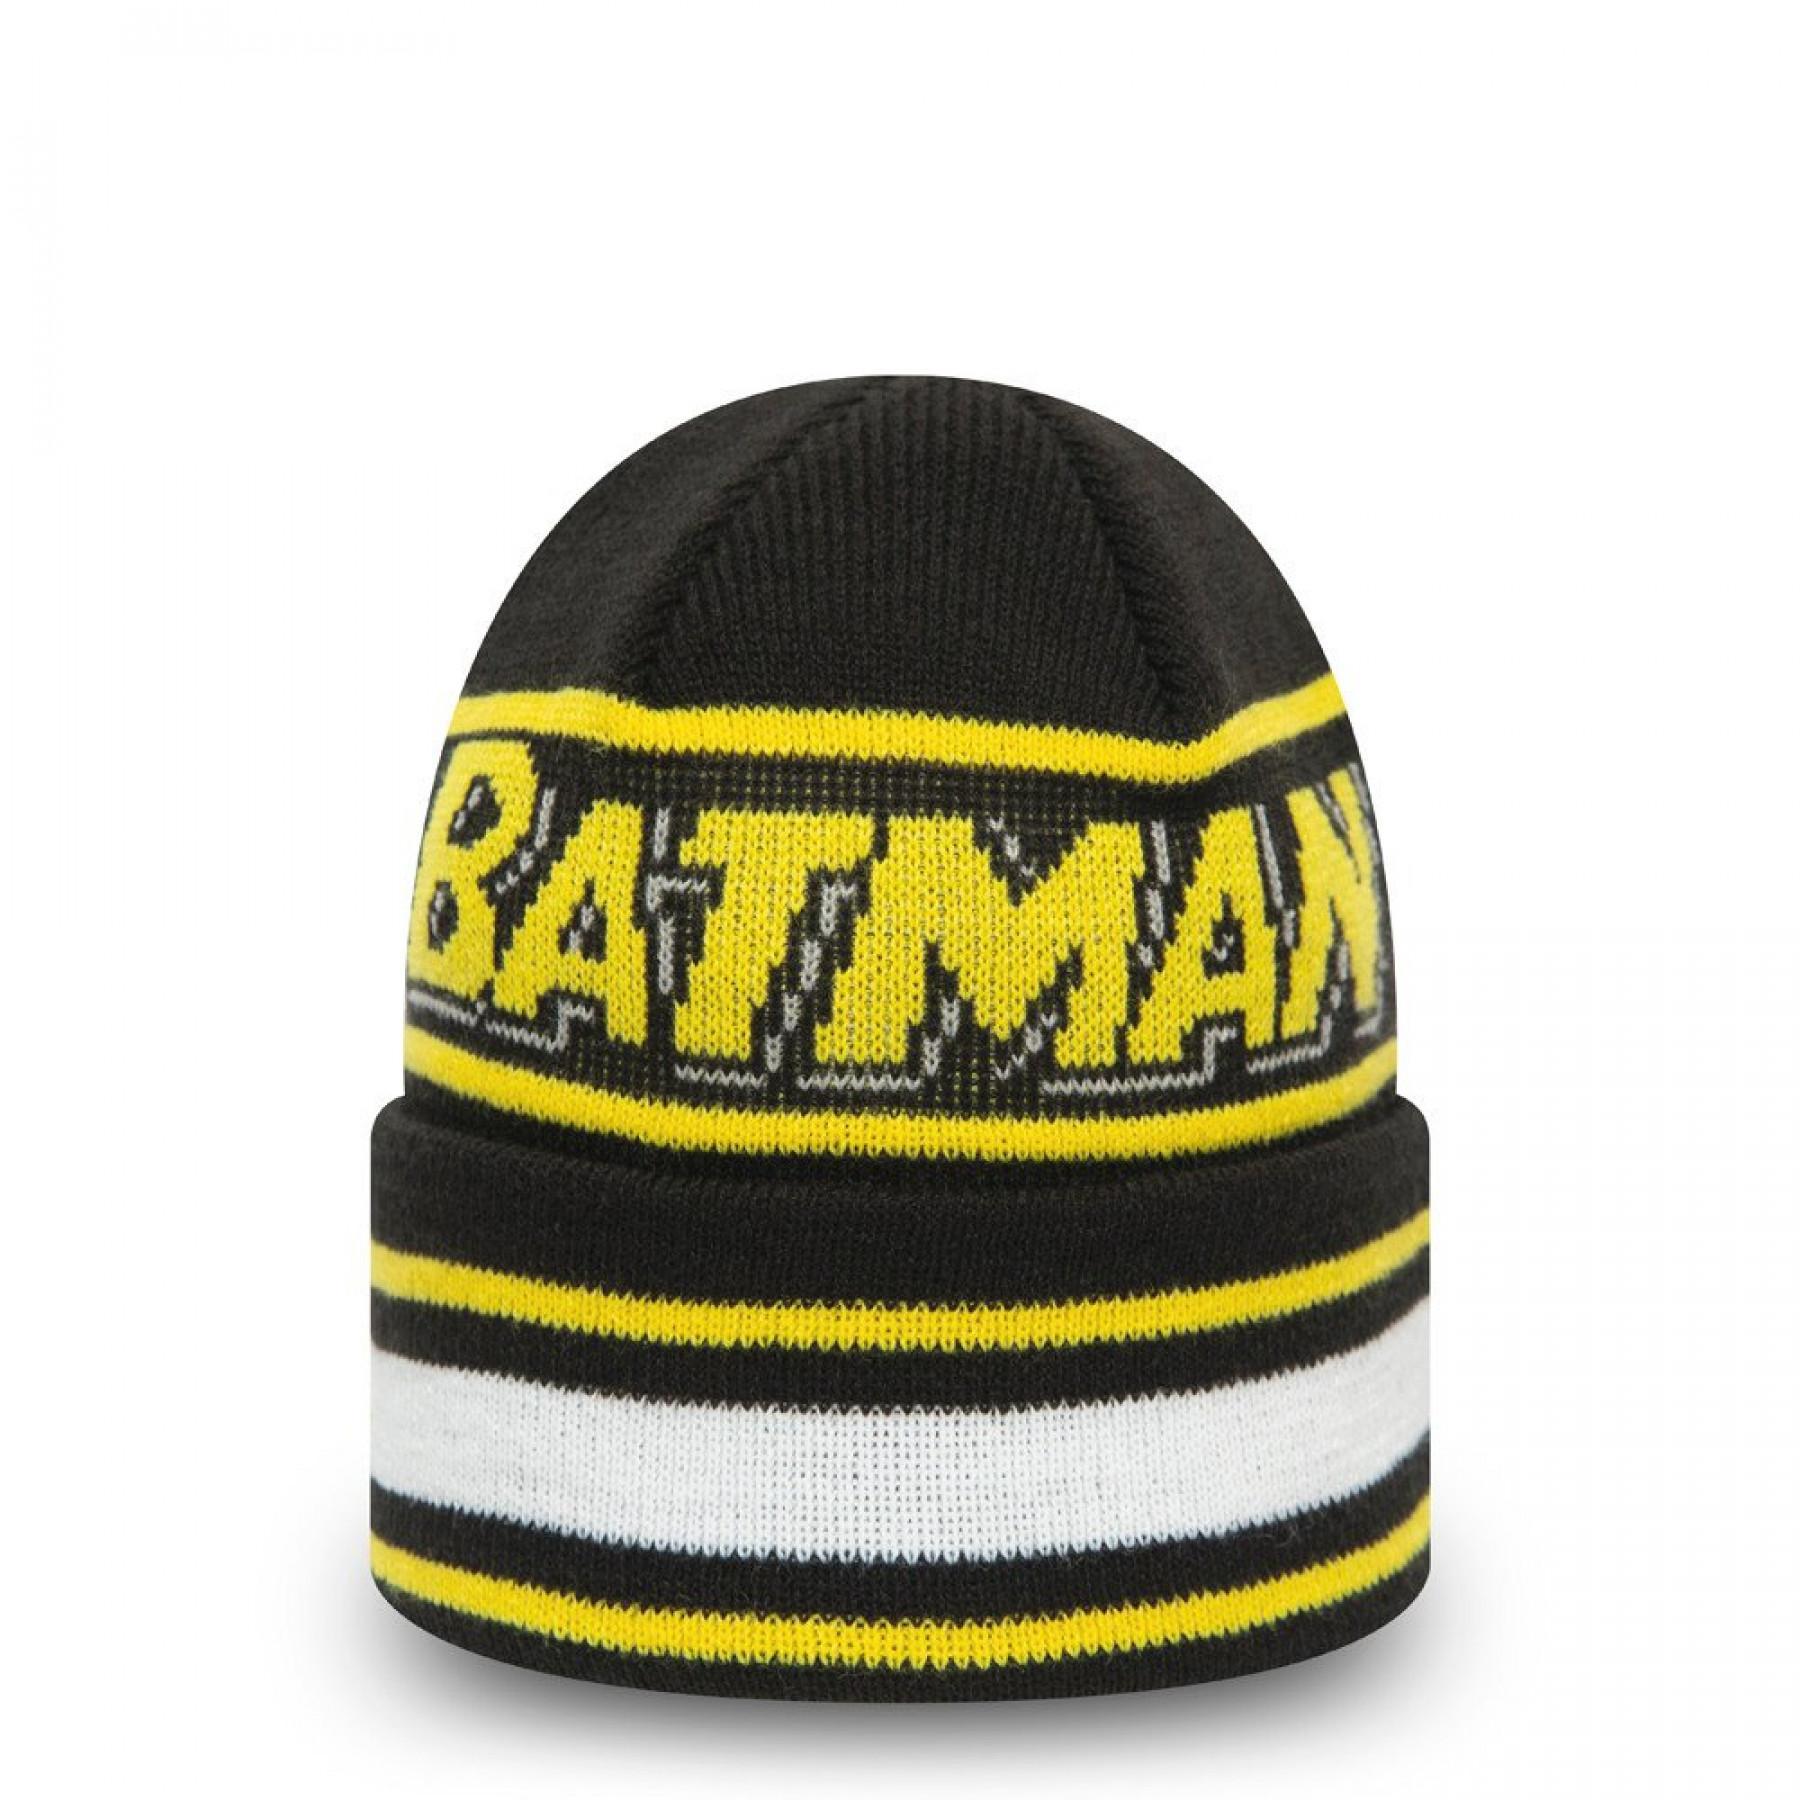 Children's hat New Era Batman DC Character Knit